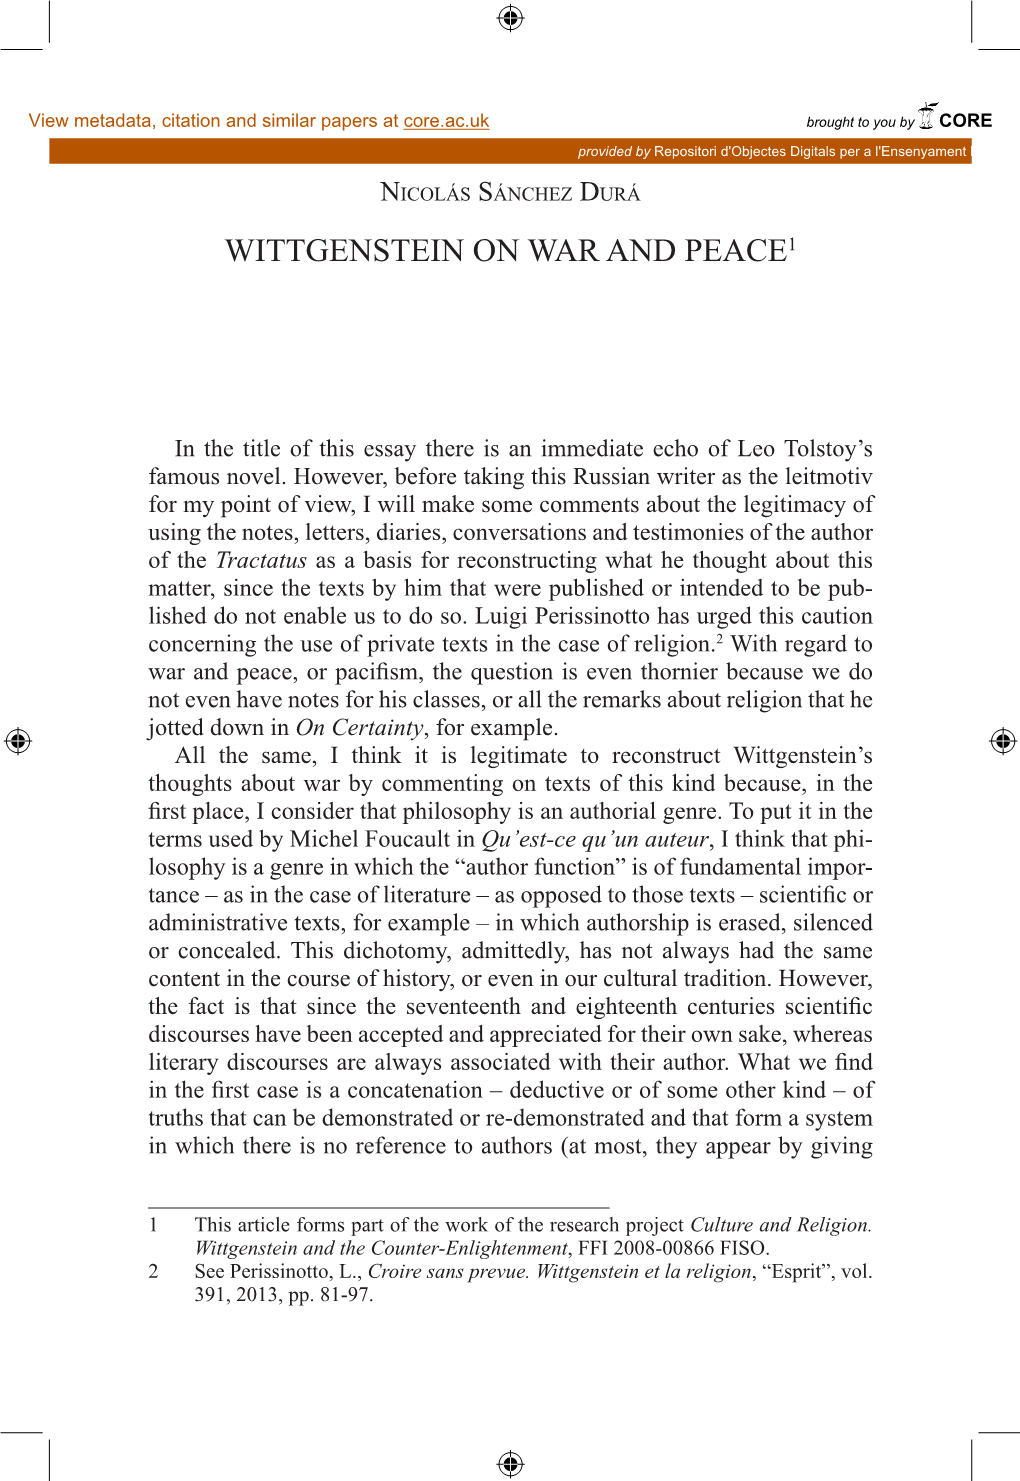 Wittgenstein on War and Peace1